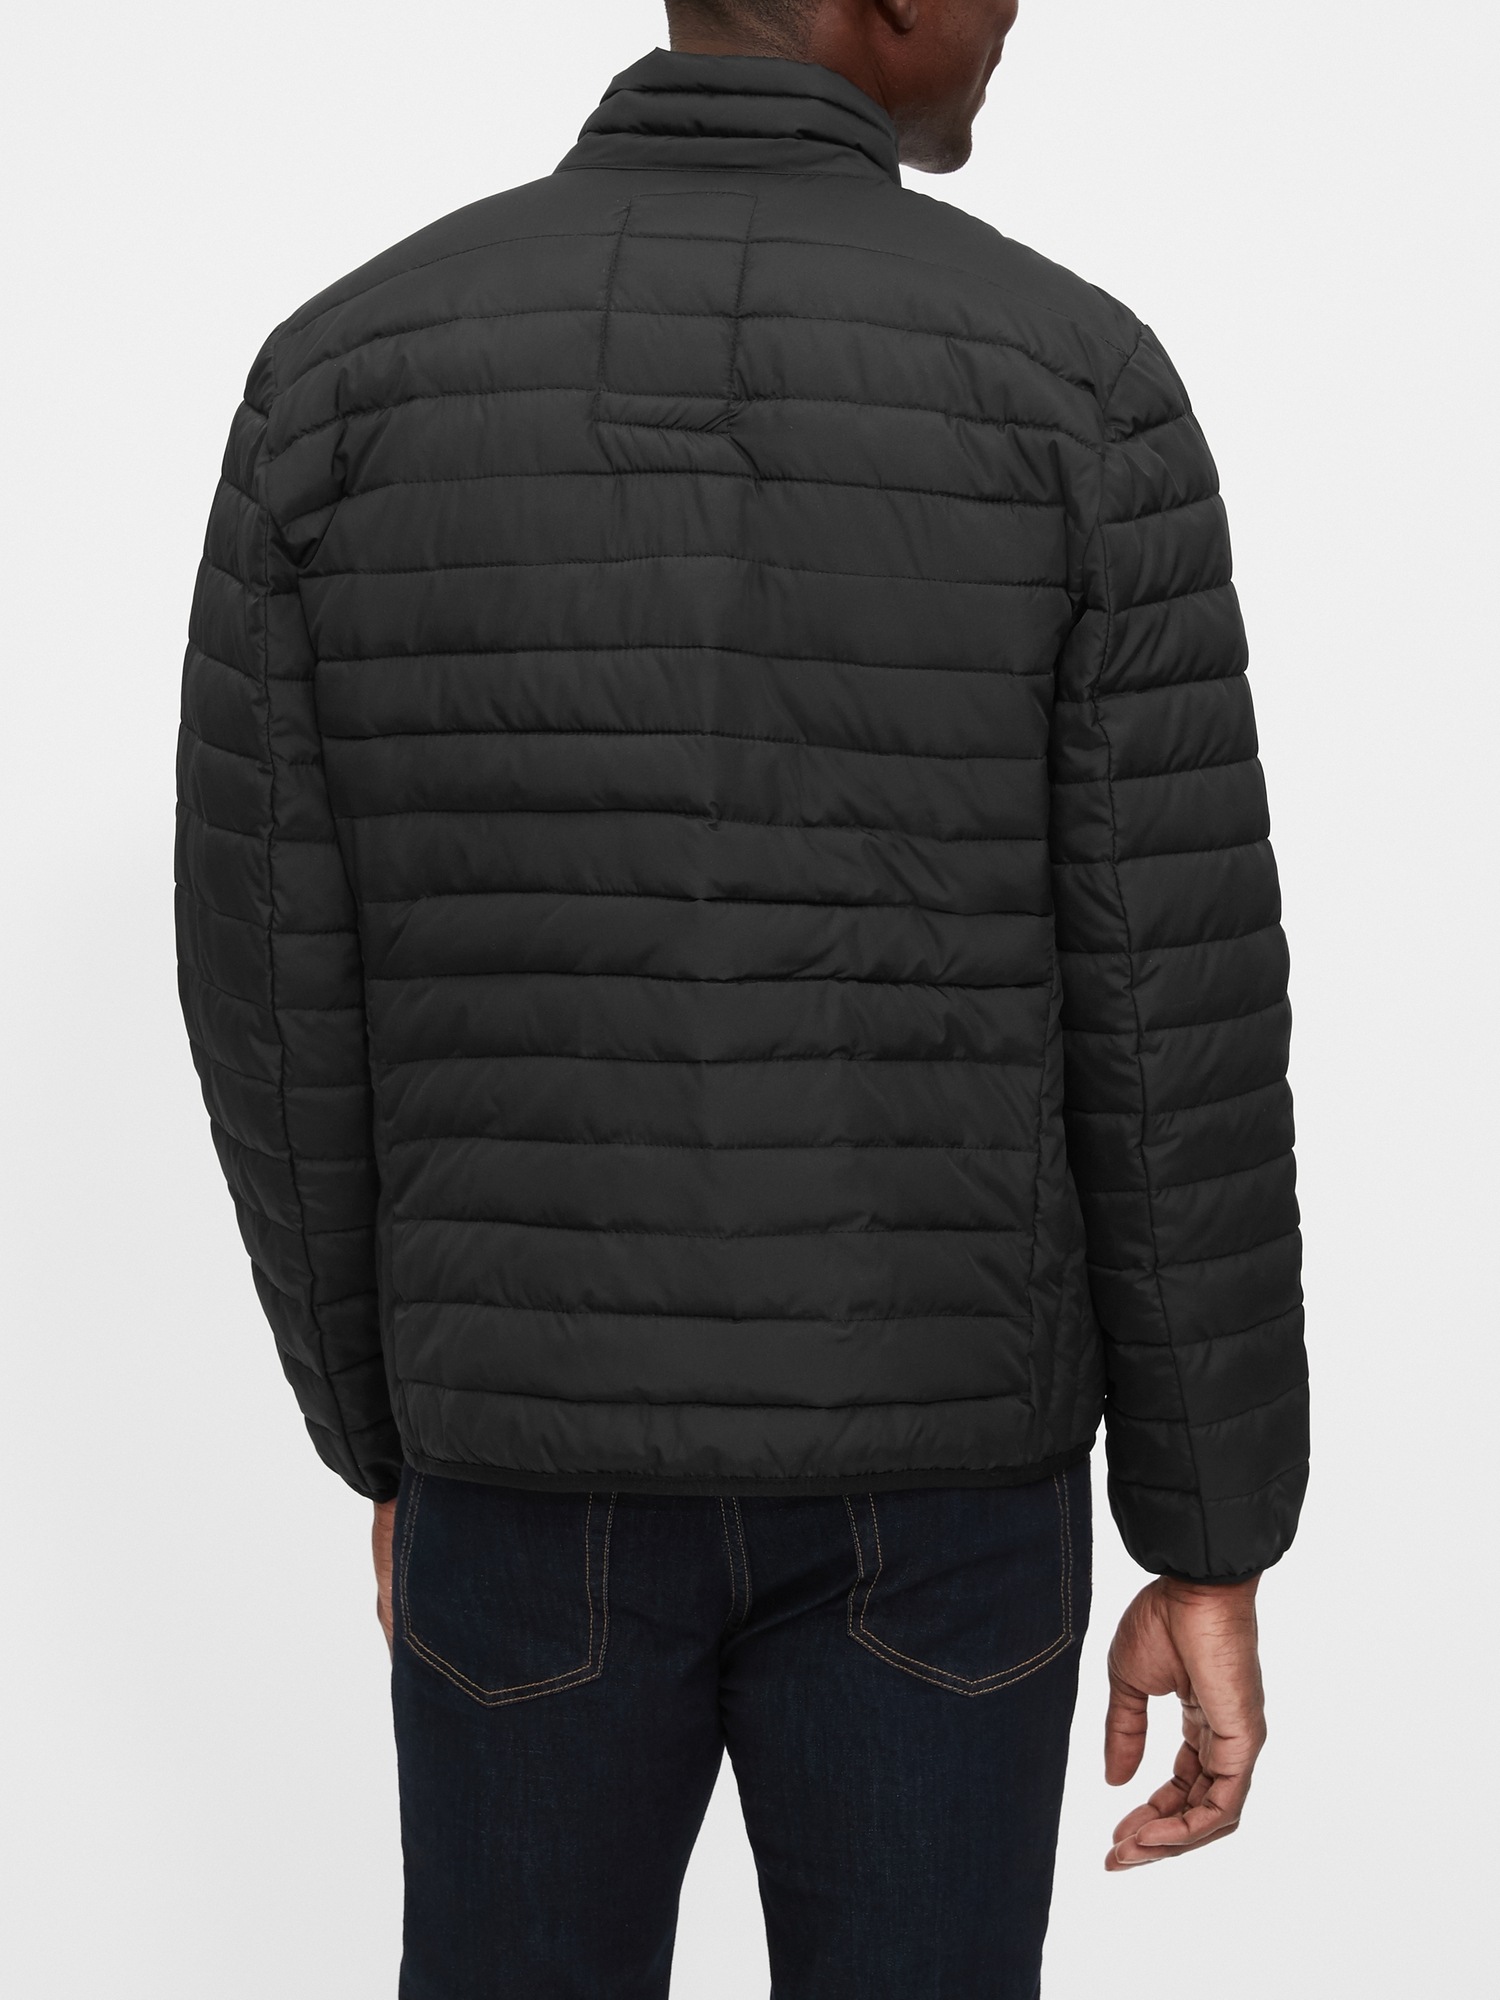 gap coldcontrol lightweight puffer jacket